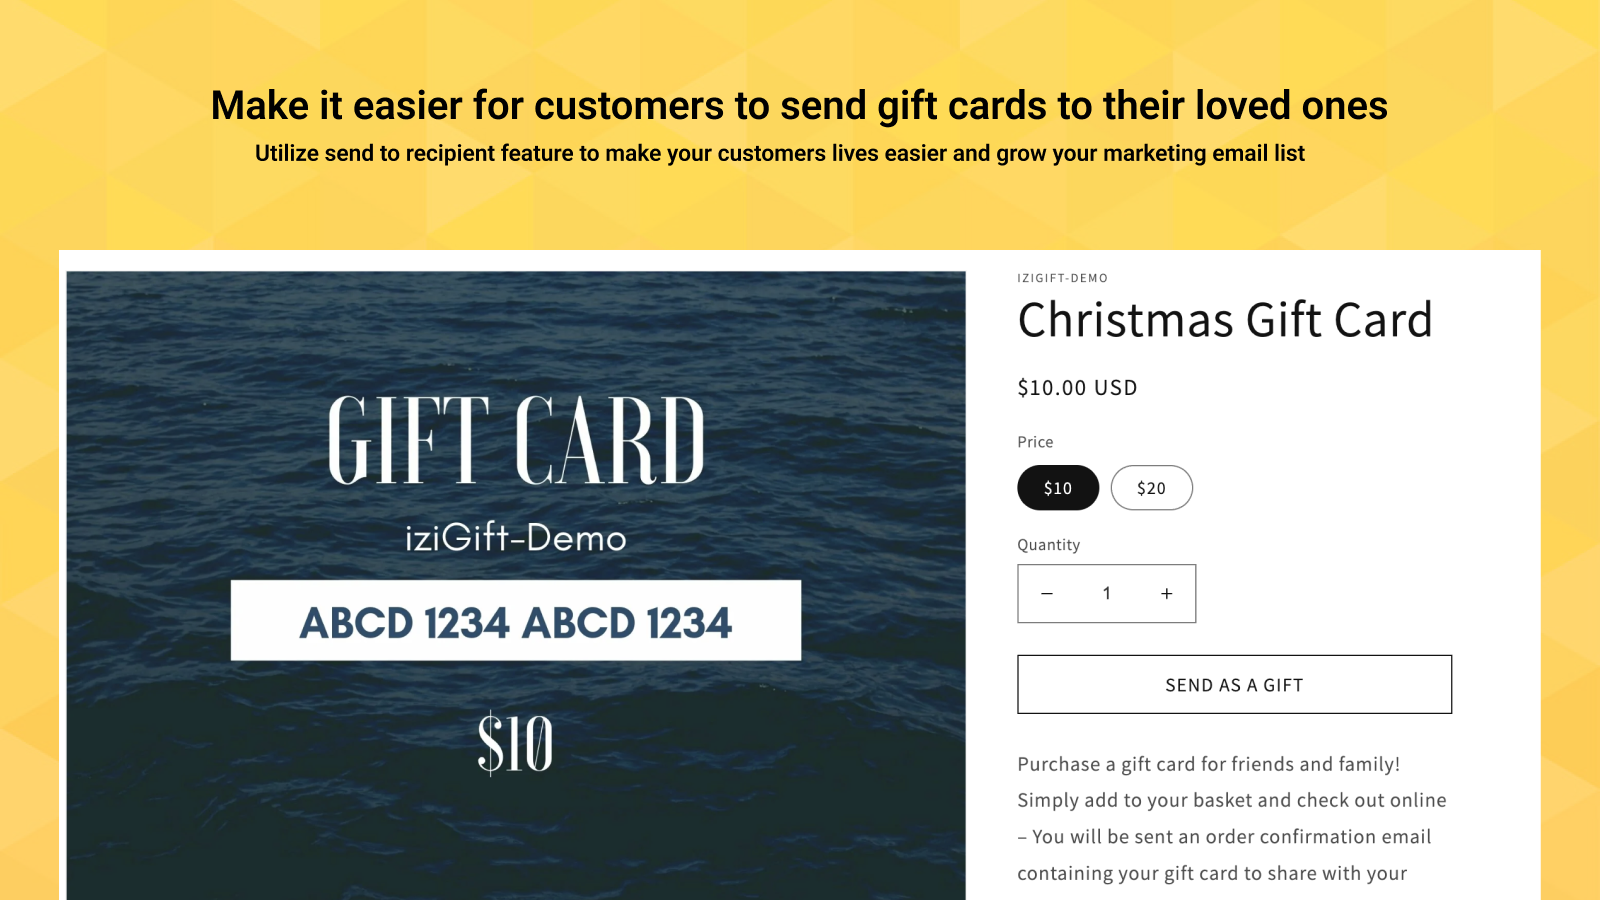 Shopper kan e-maile gavekort direkte (Klaviyo-integration)